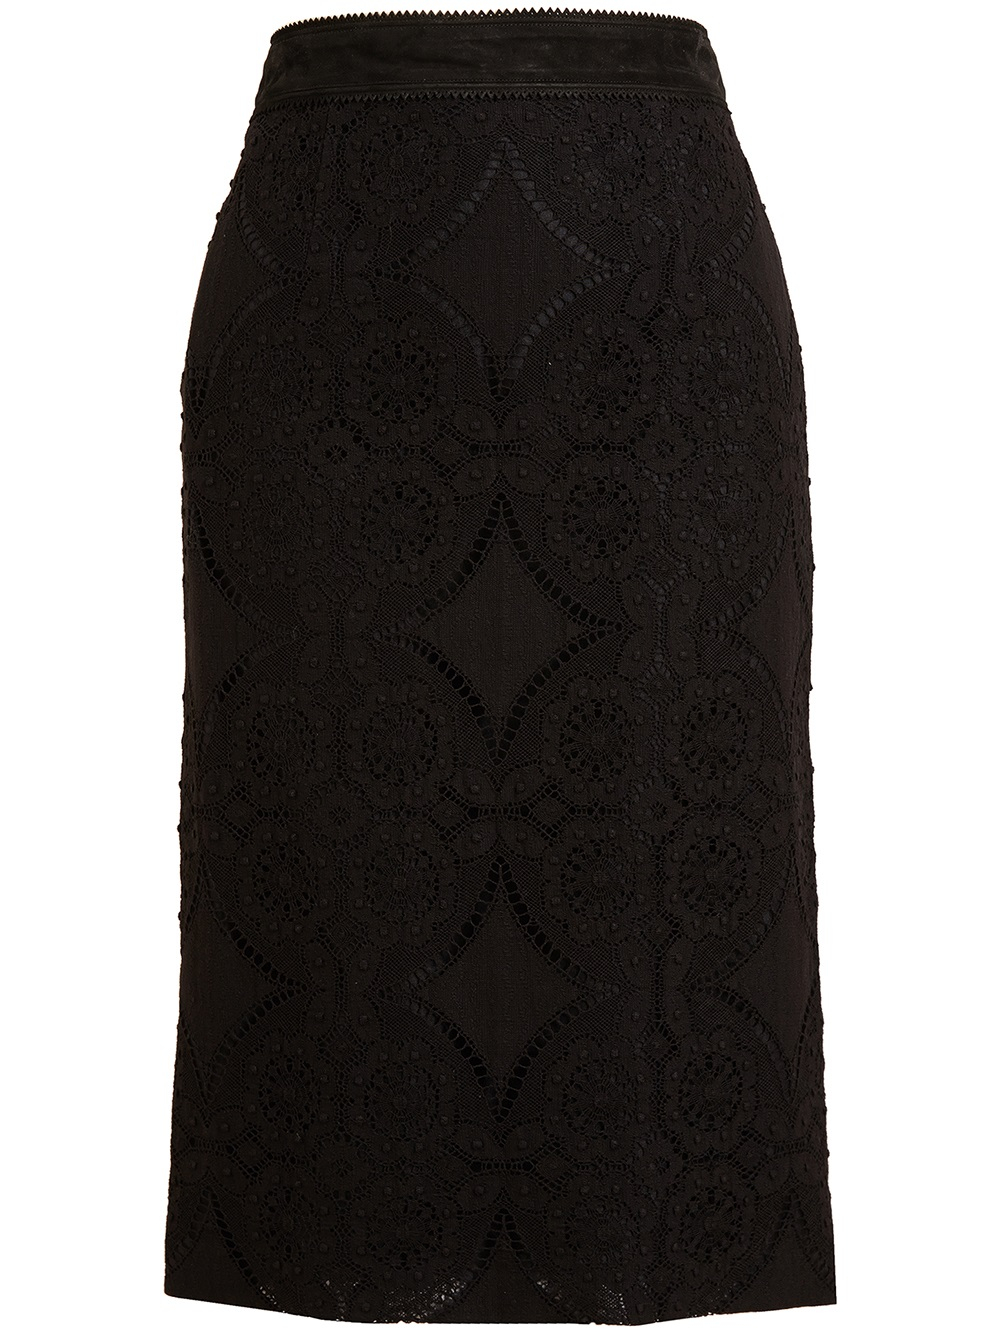 Antonio berardi Macramé Lace Pencil Skirt in Black | Lyst